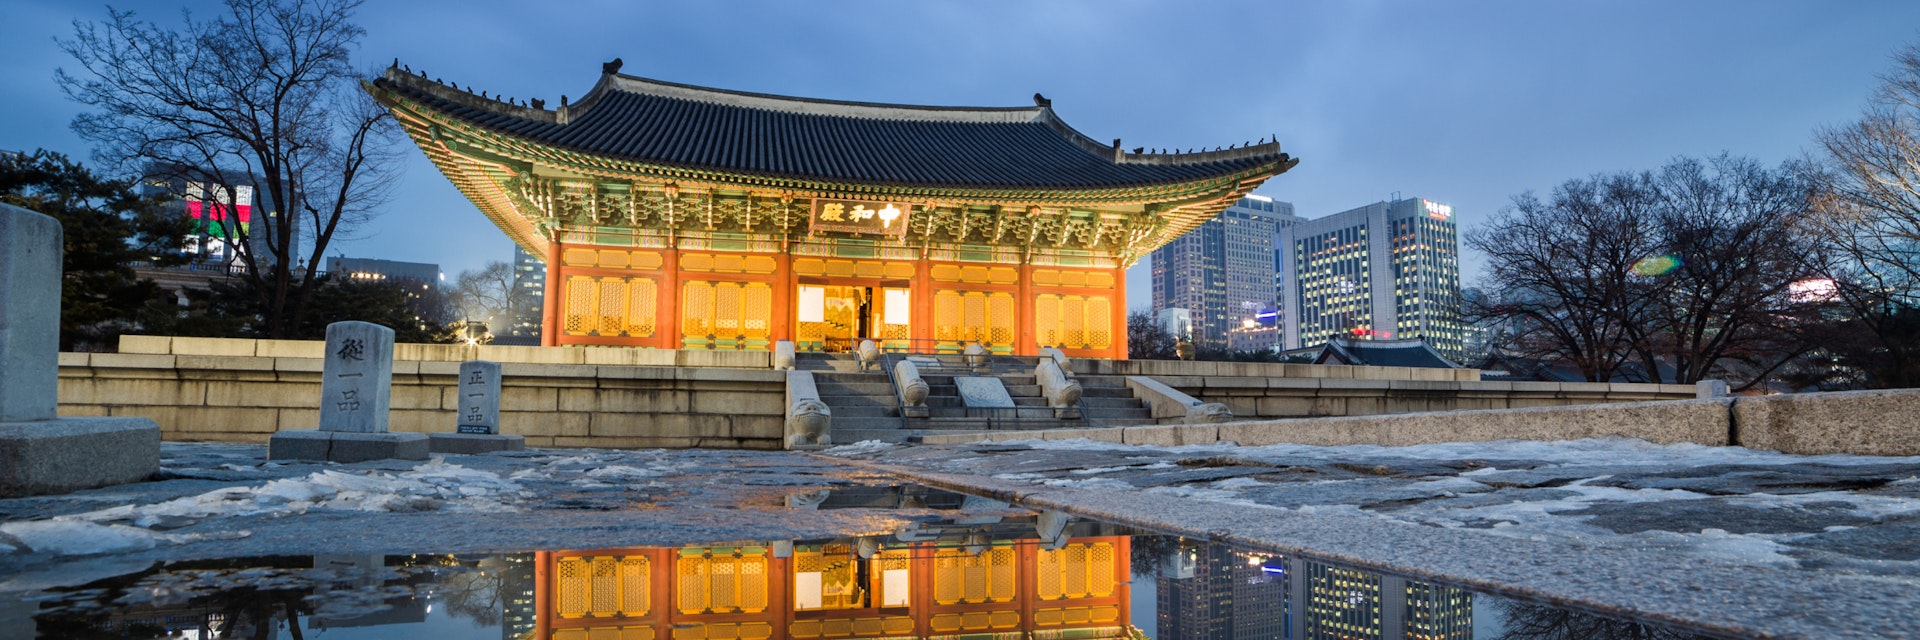 Deoksugung Palace in Korea .